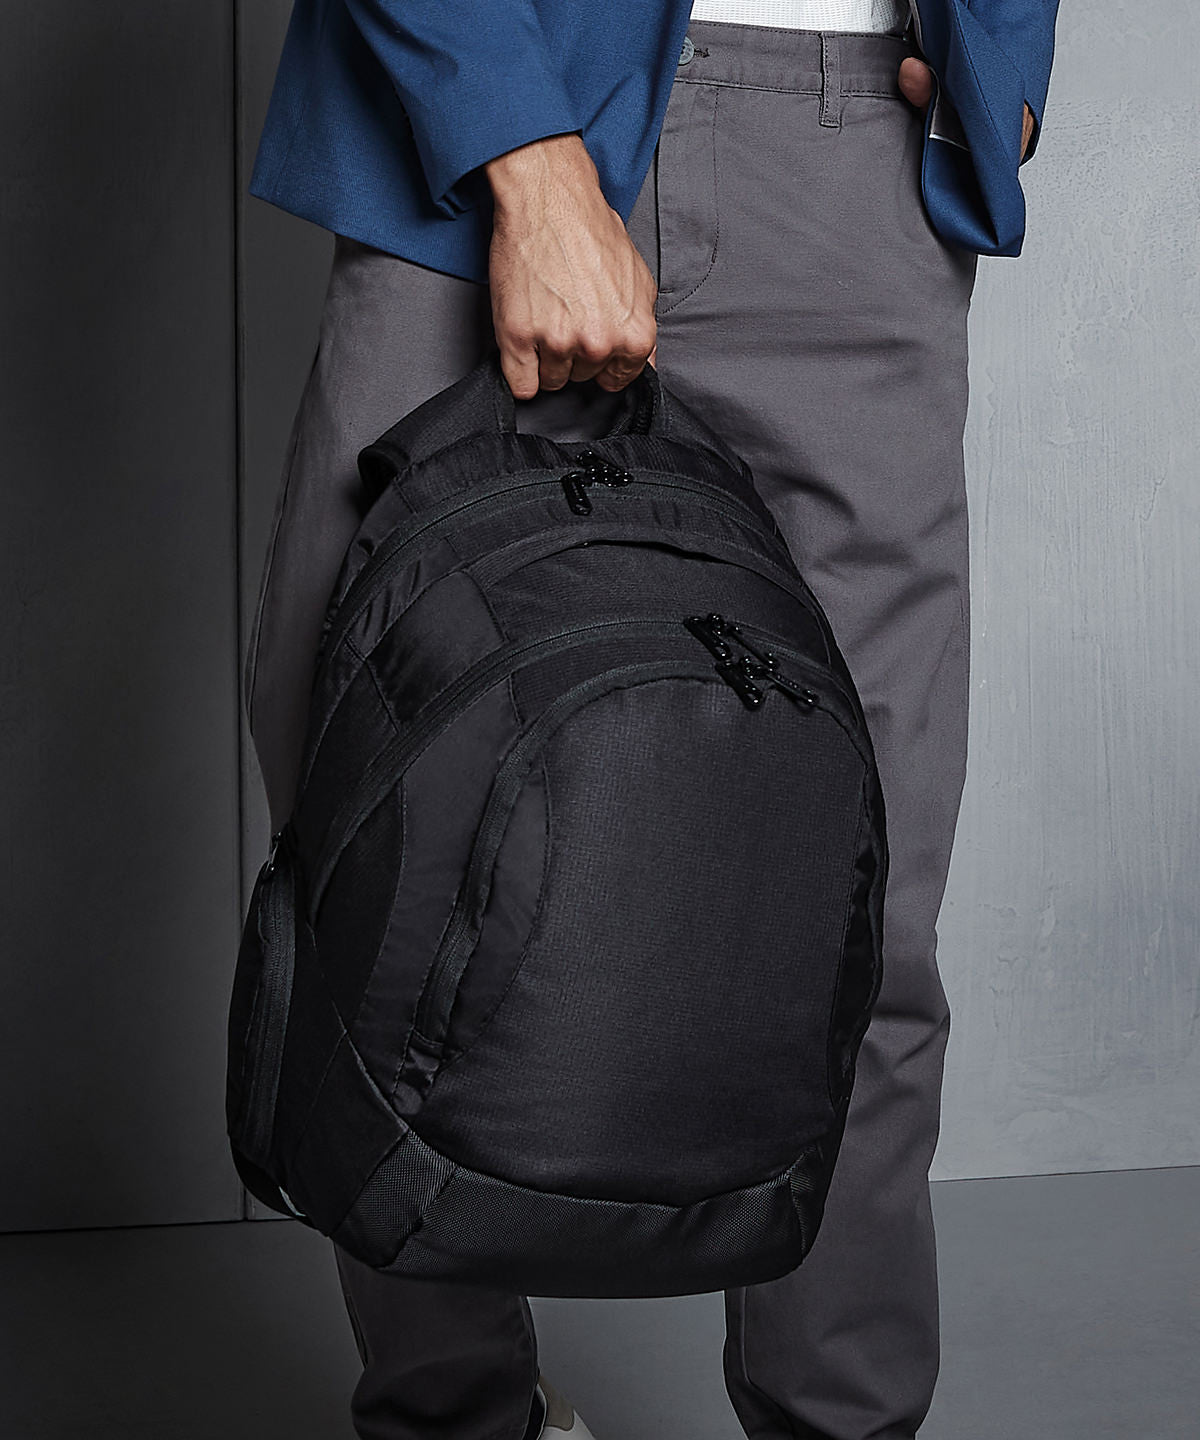 Töskur - Vessel™ Laptop Backpack